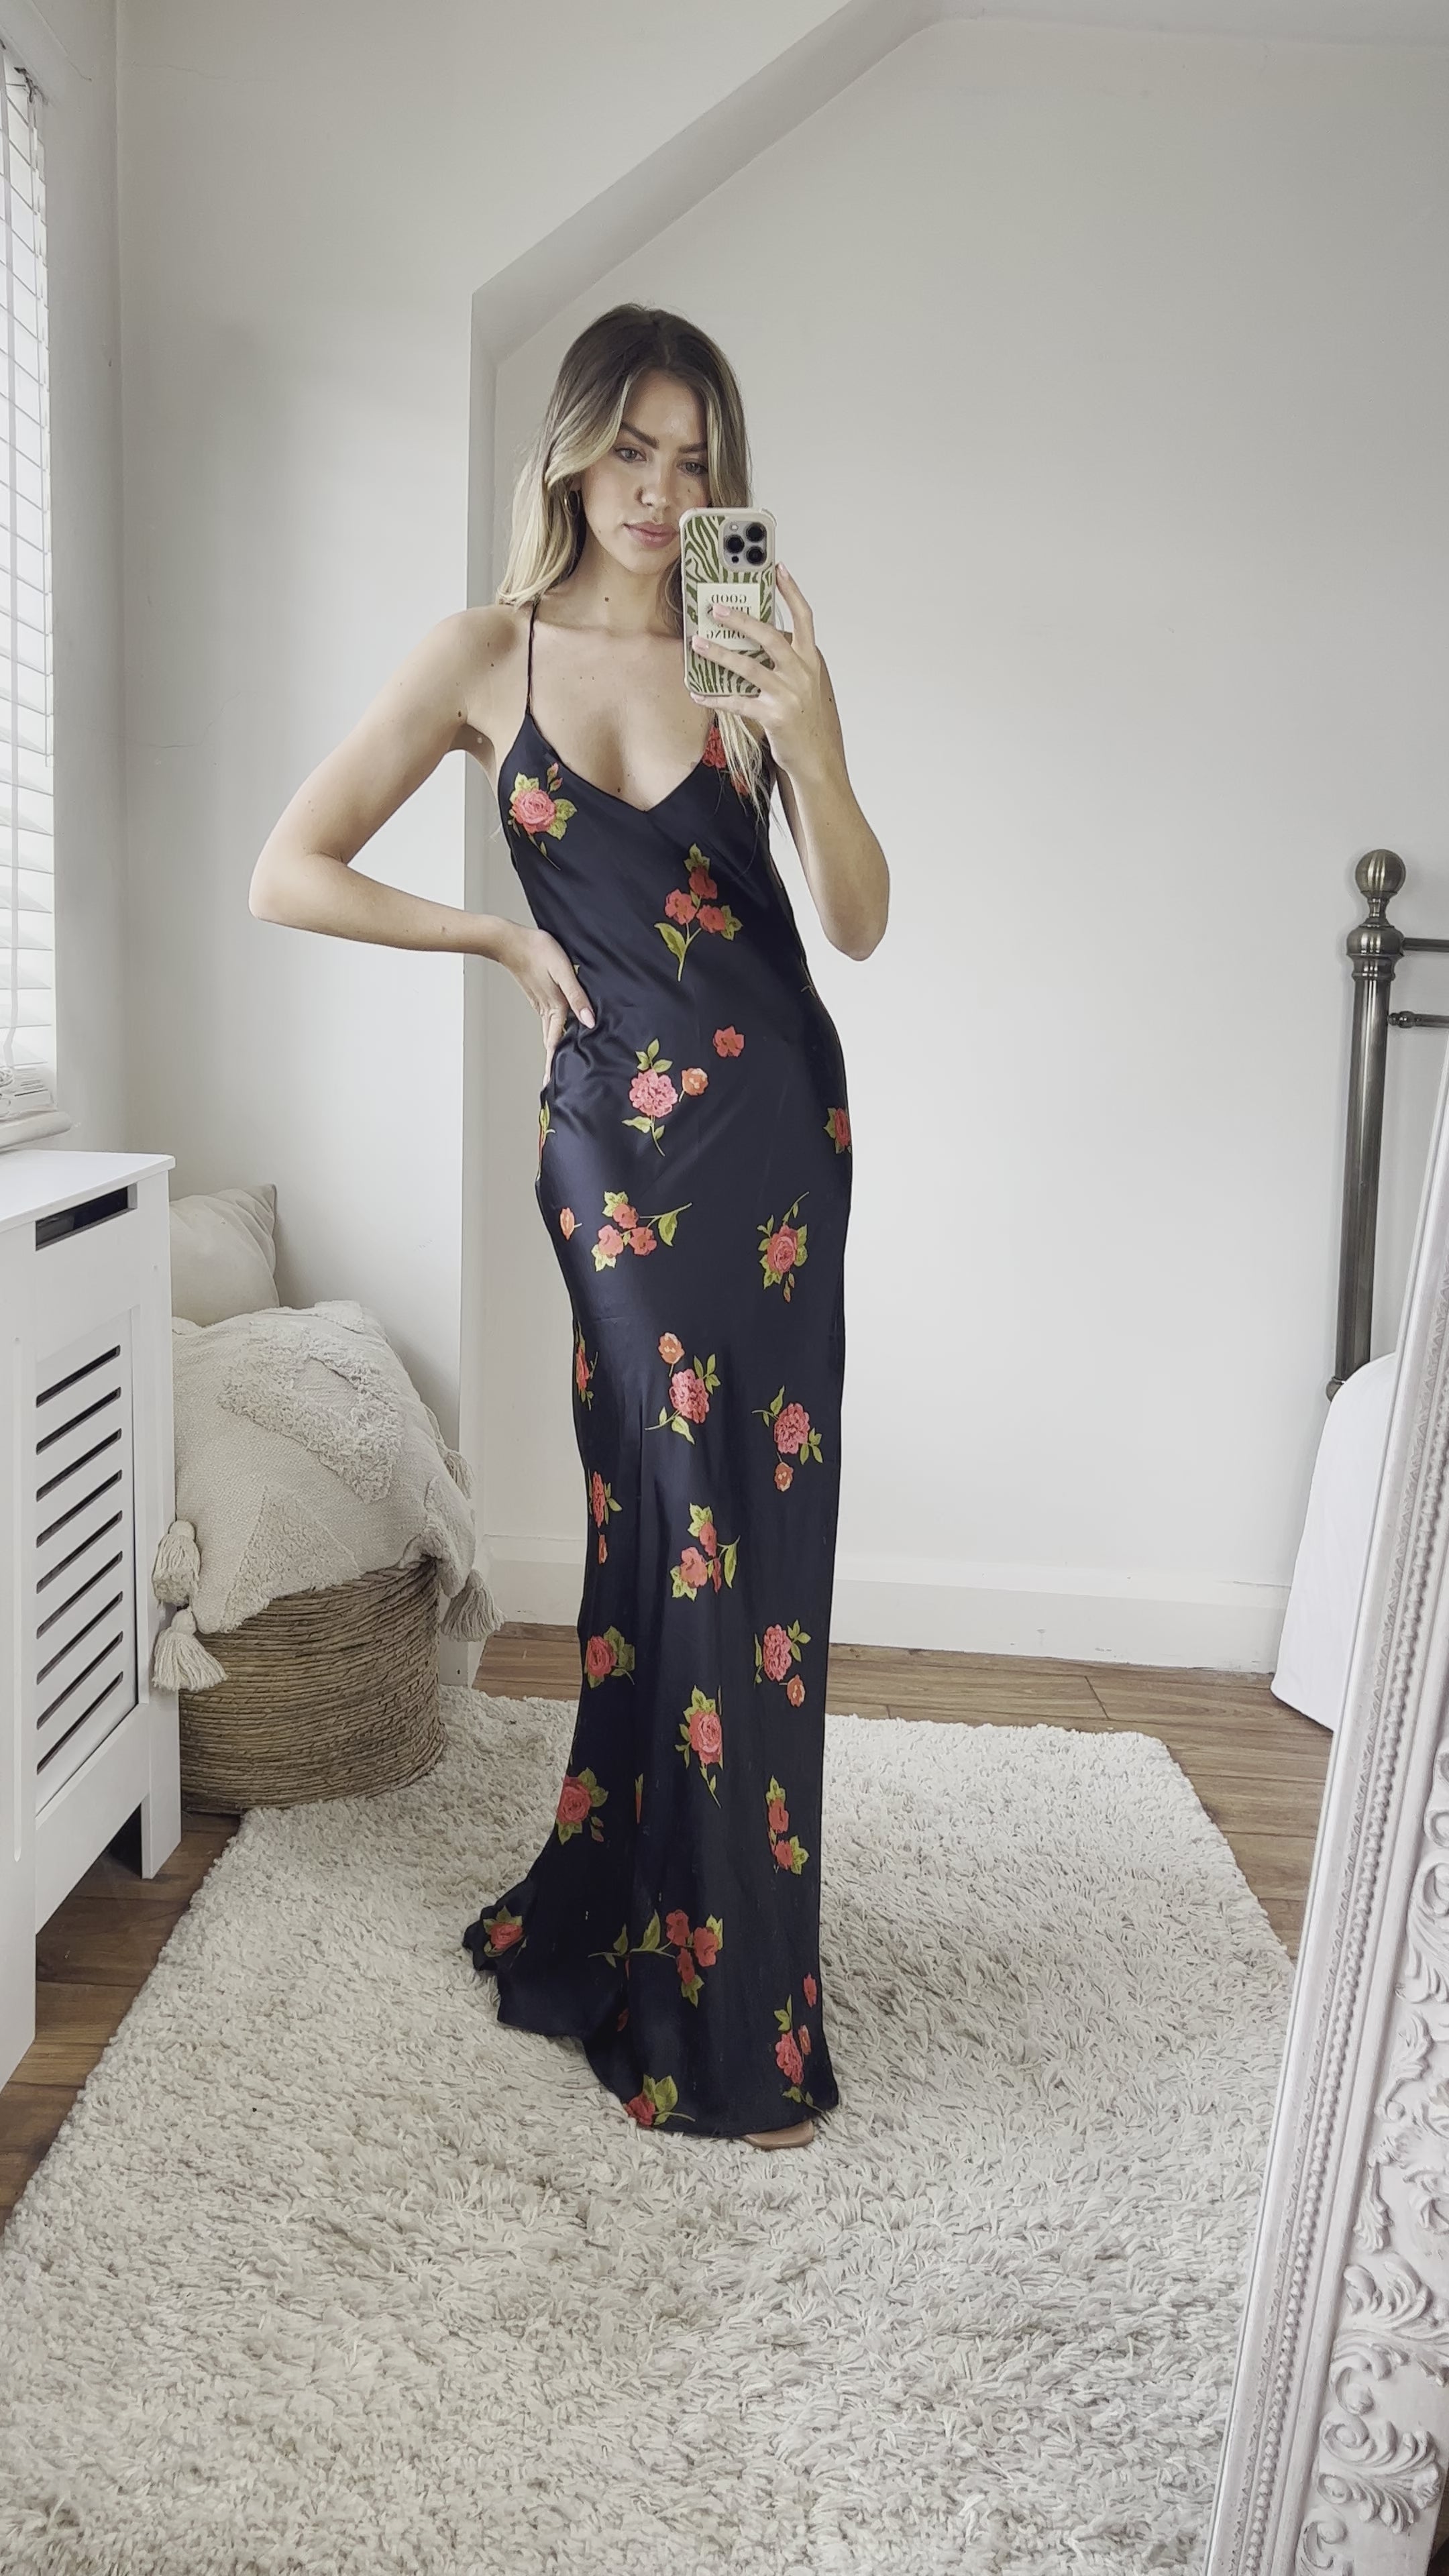 Zara Black Floral Printed Maxi Dress